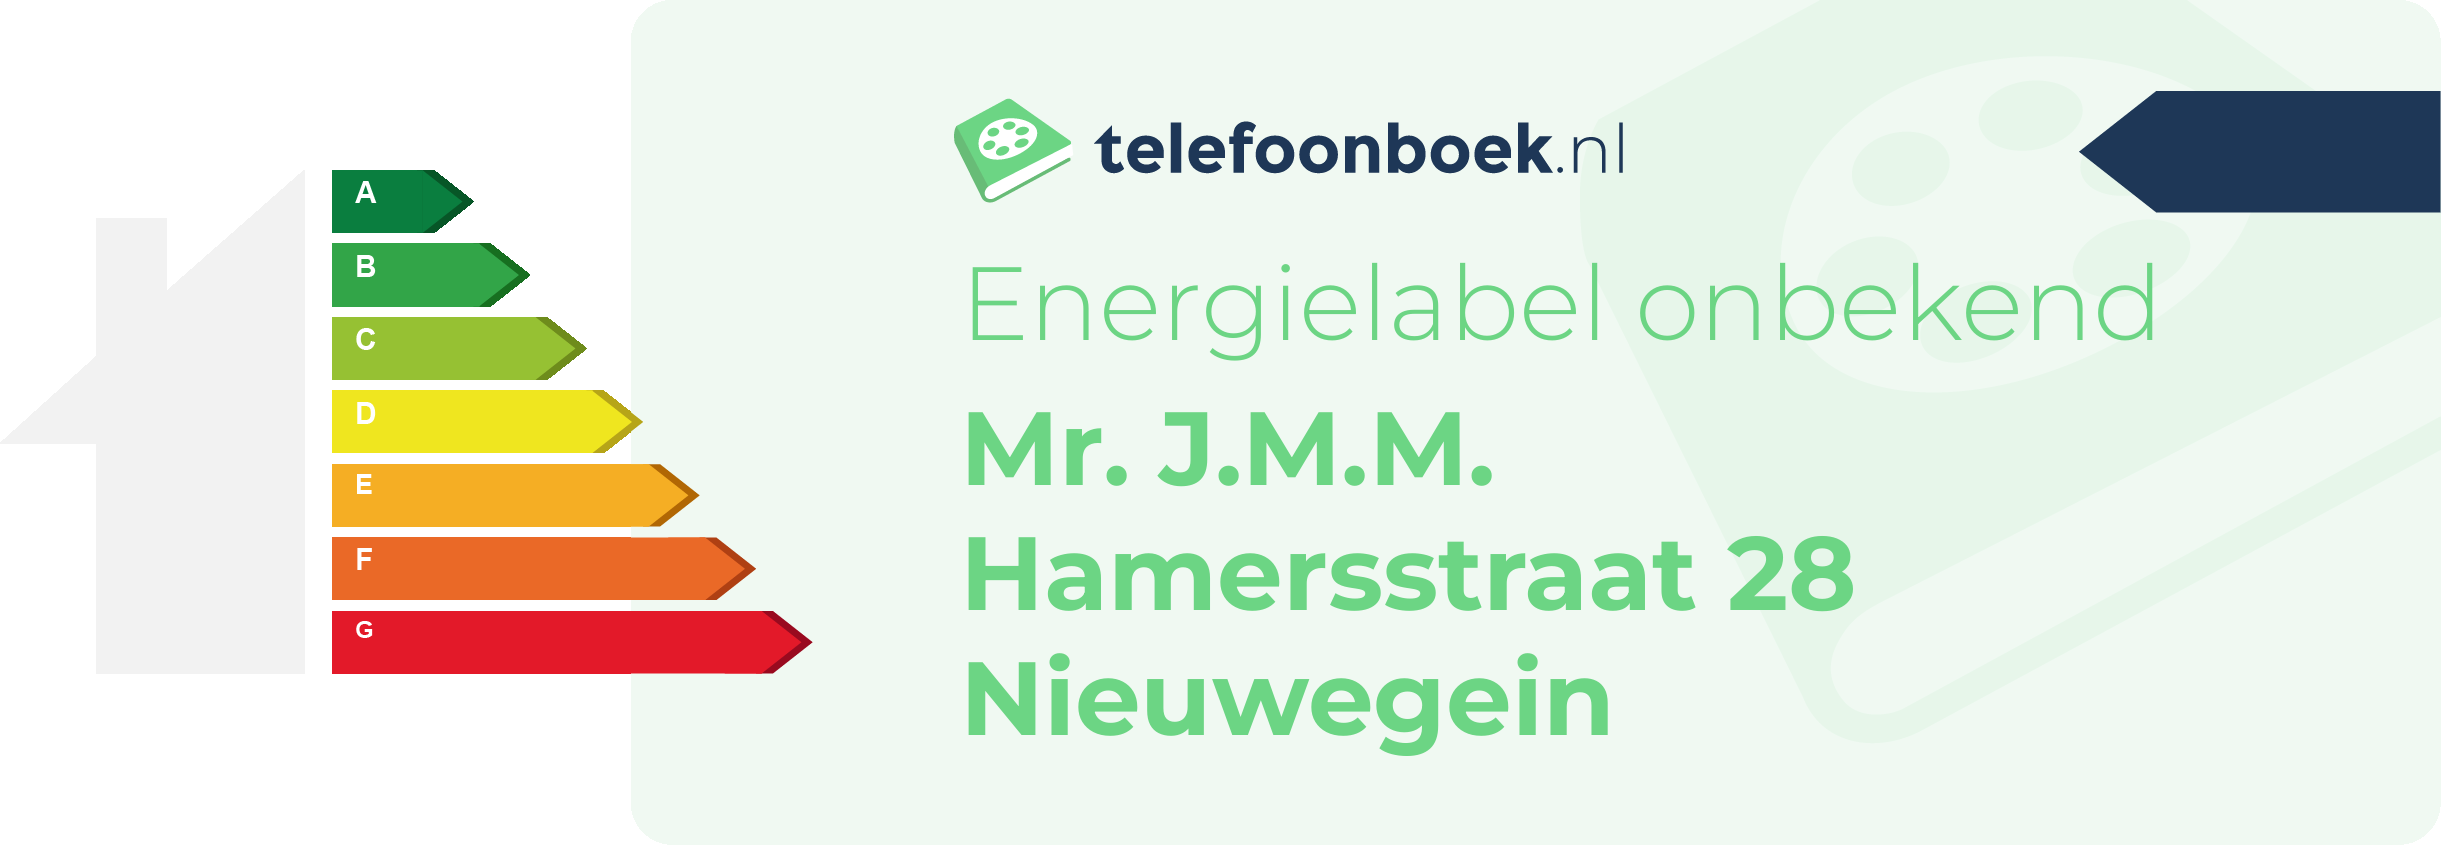 Energielabel Mr. J.M.M. Hamersstraat 28 Nieuwegein